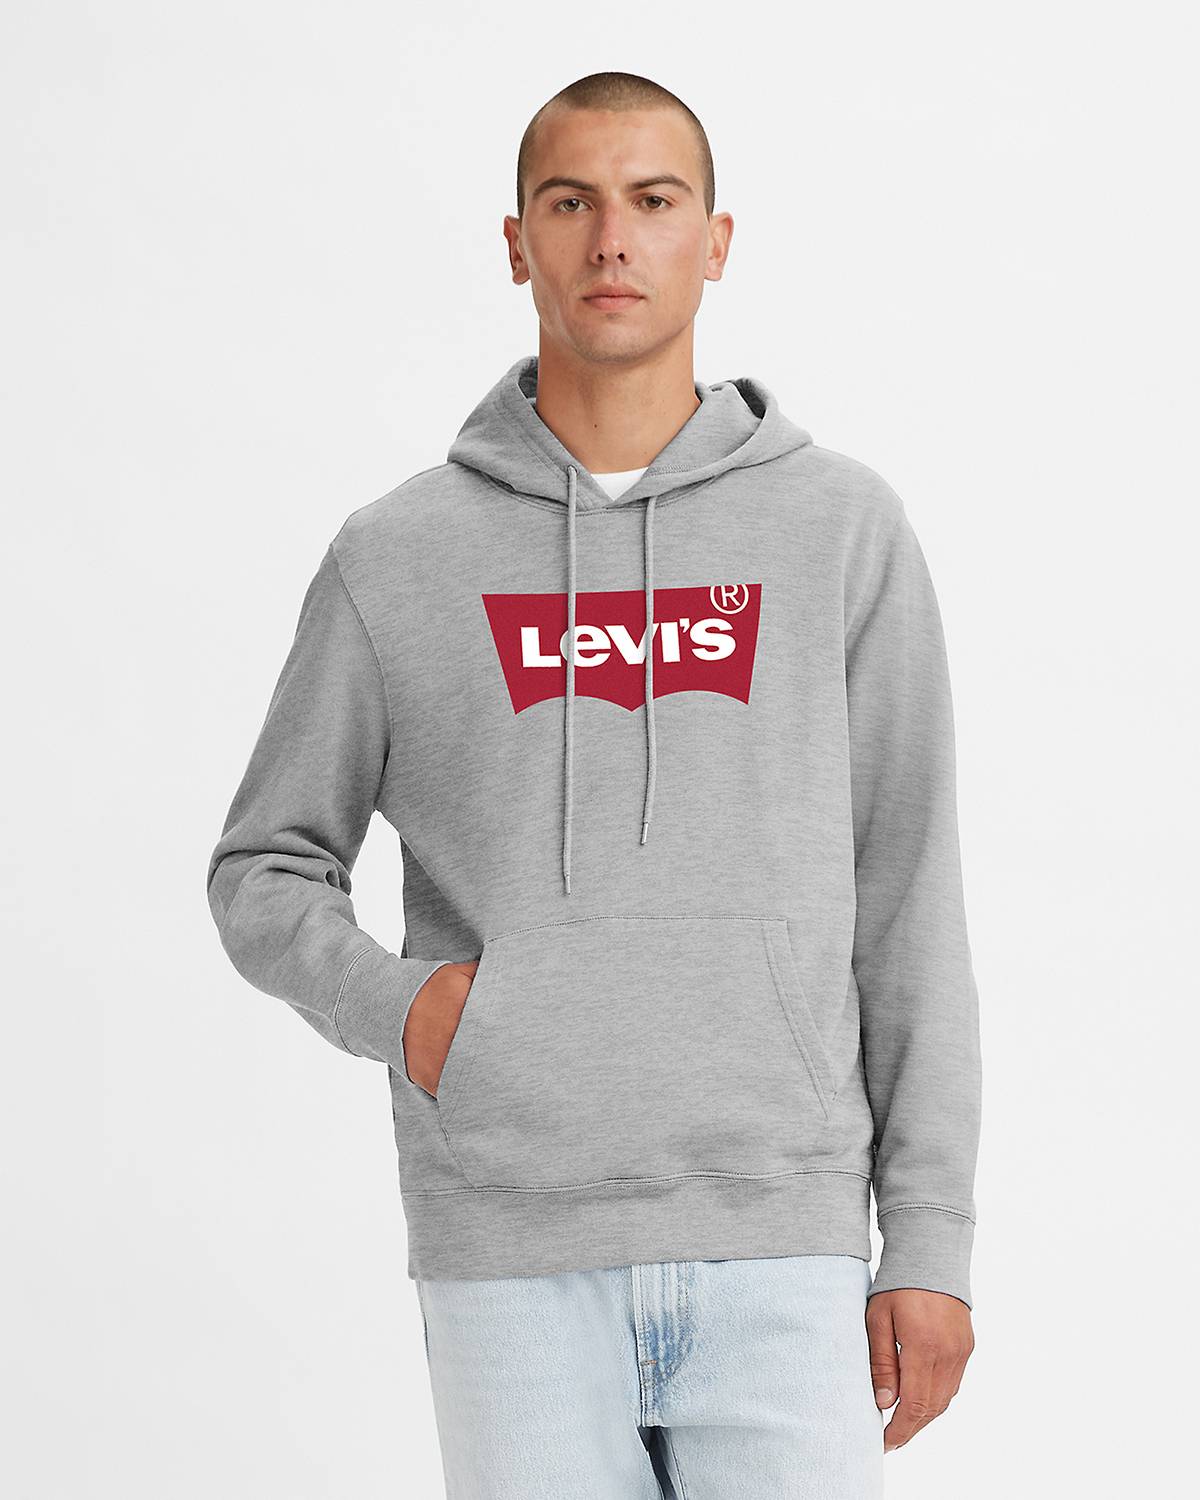 Levi's® - 14148 - bonnets 56 dark grey - Jeanstation.fr